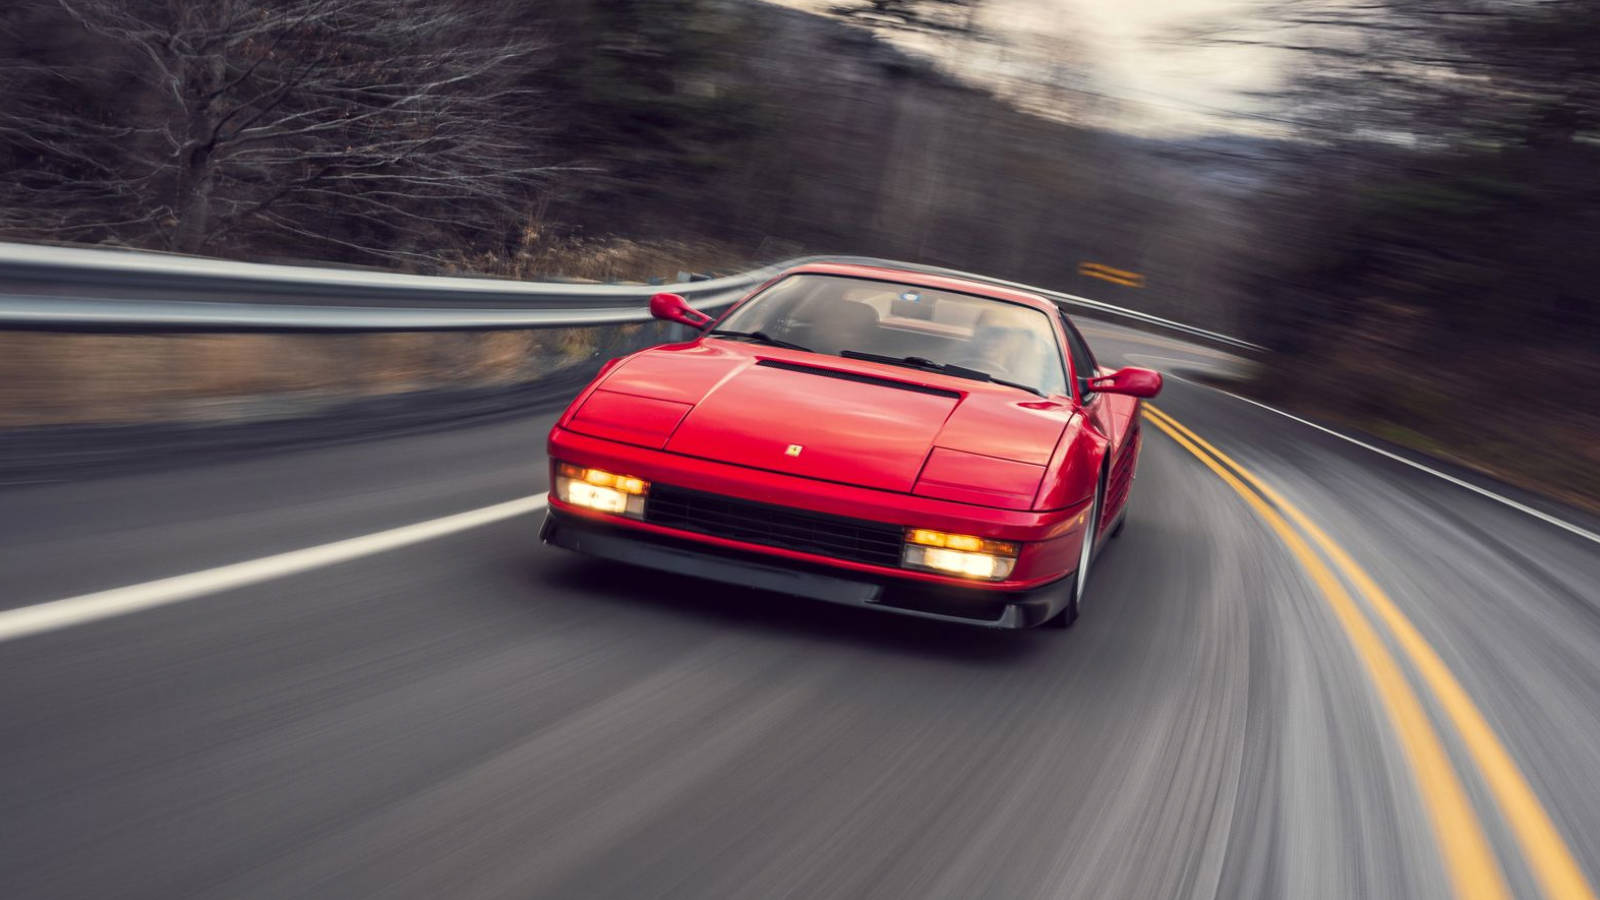 Ferrari Testarossa Review — Performance, Iconic Design & More